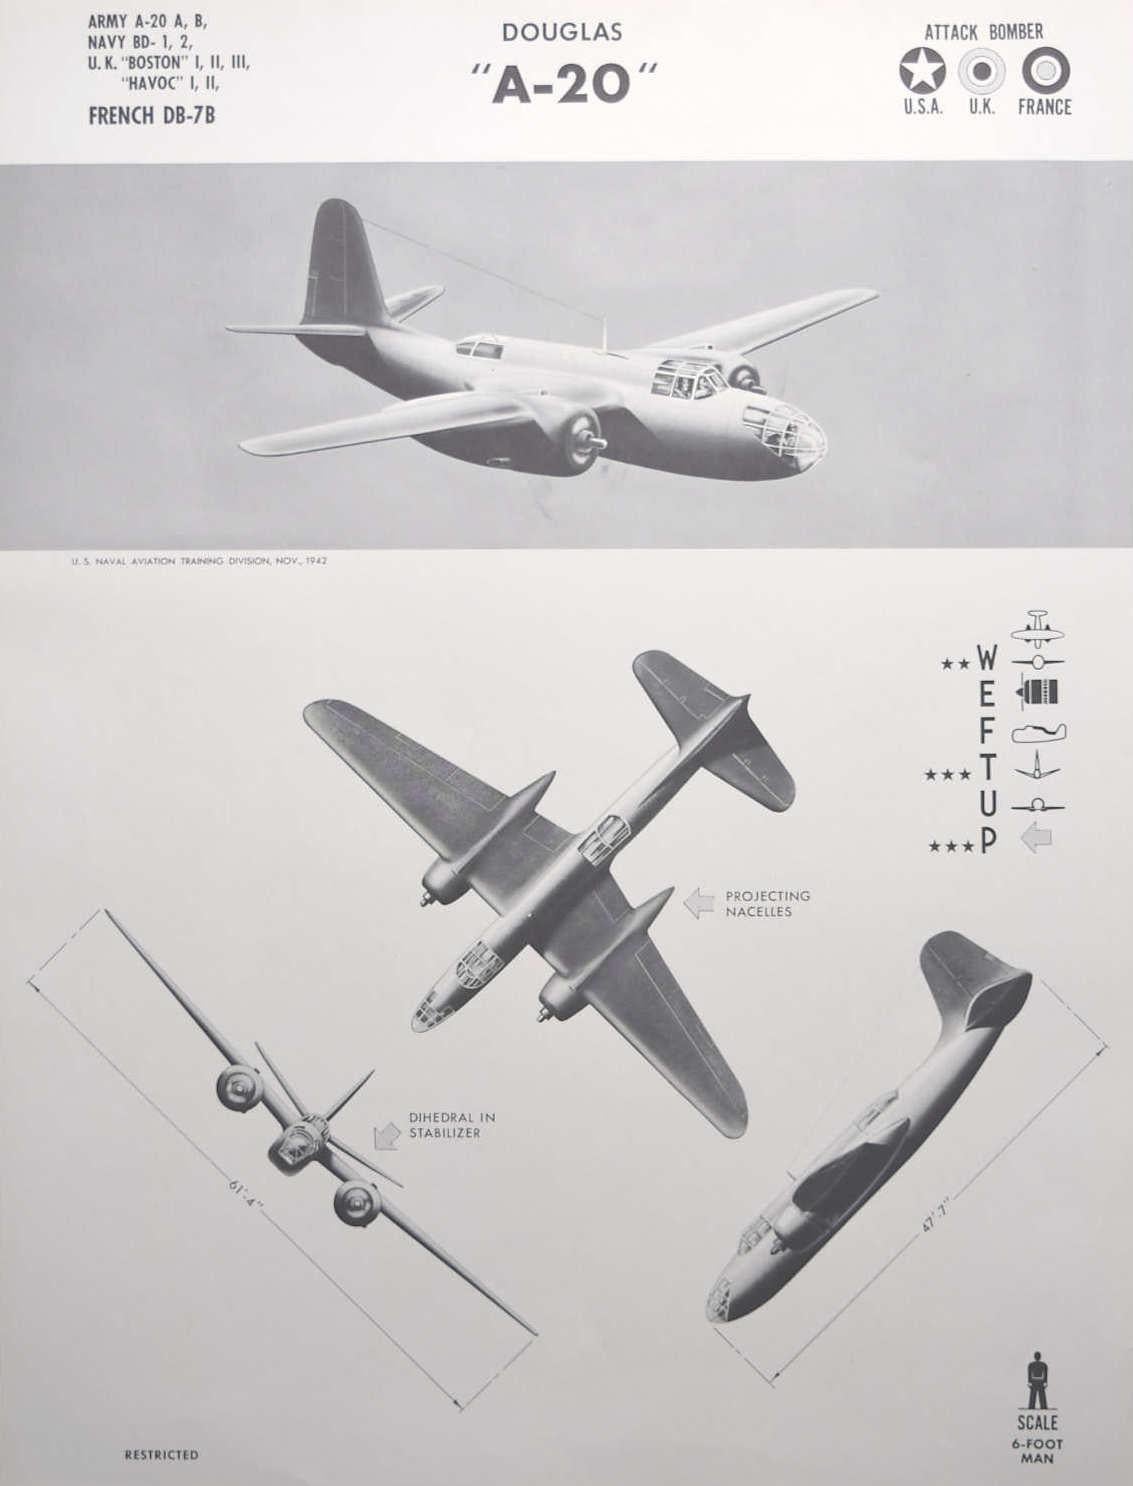 1942 Douglas "A-20 Havoc" USA, UK, bomber plane identification poster WW2 - Print by Unknown